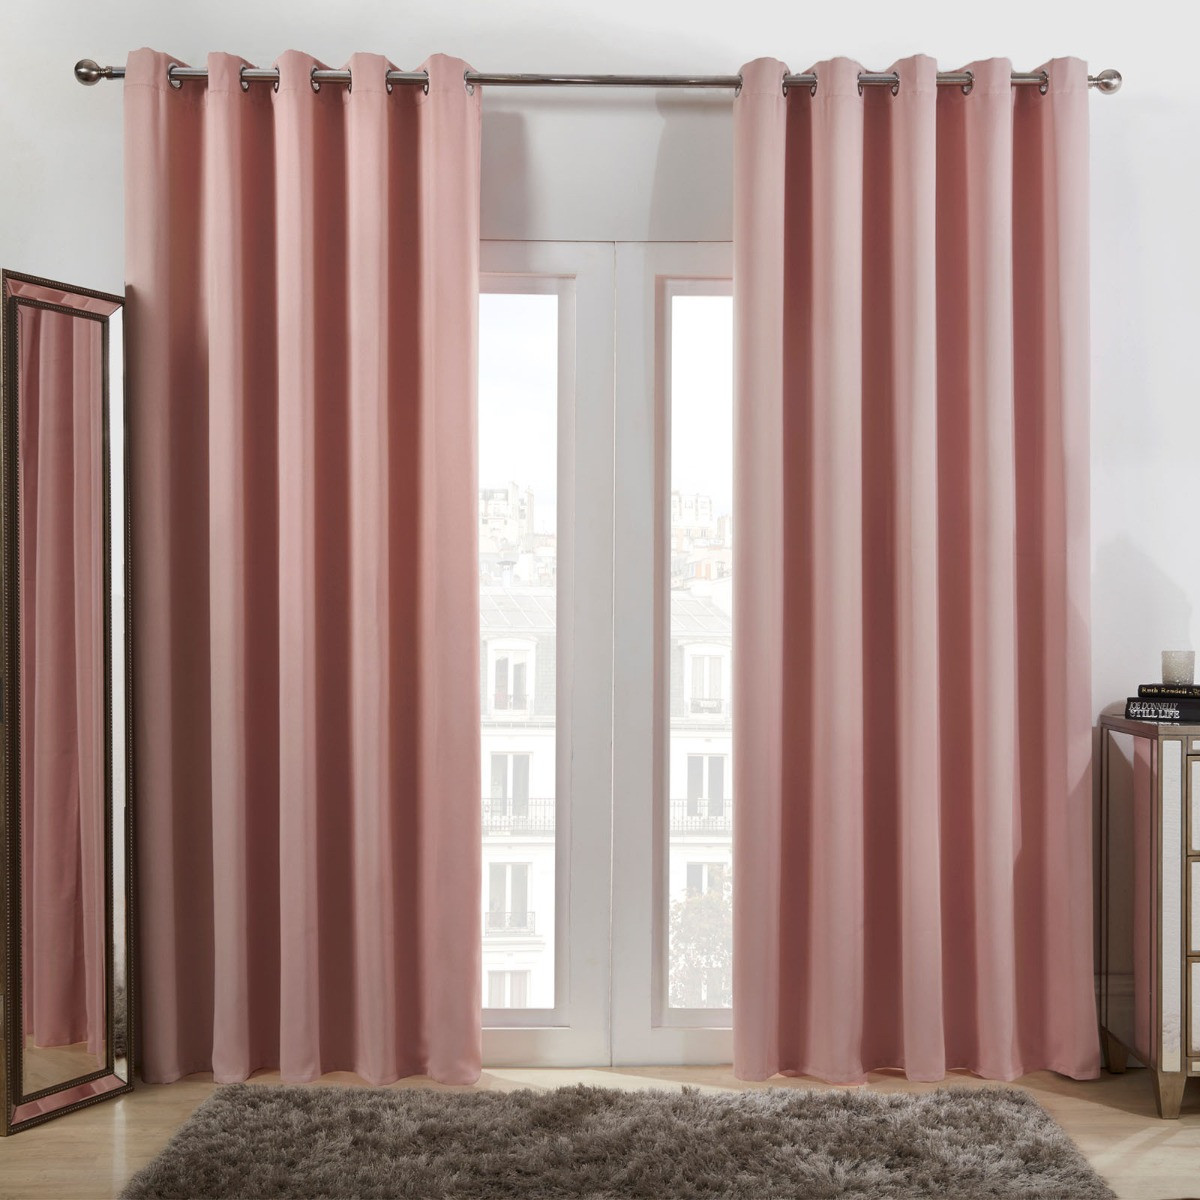 Dreamscene Eyelet Blackout Curtains - Blush Pink, 66" x 54">